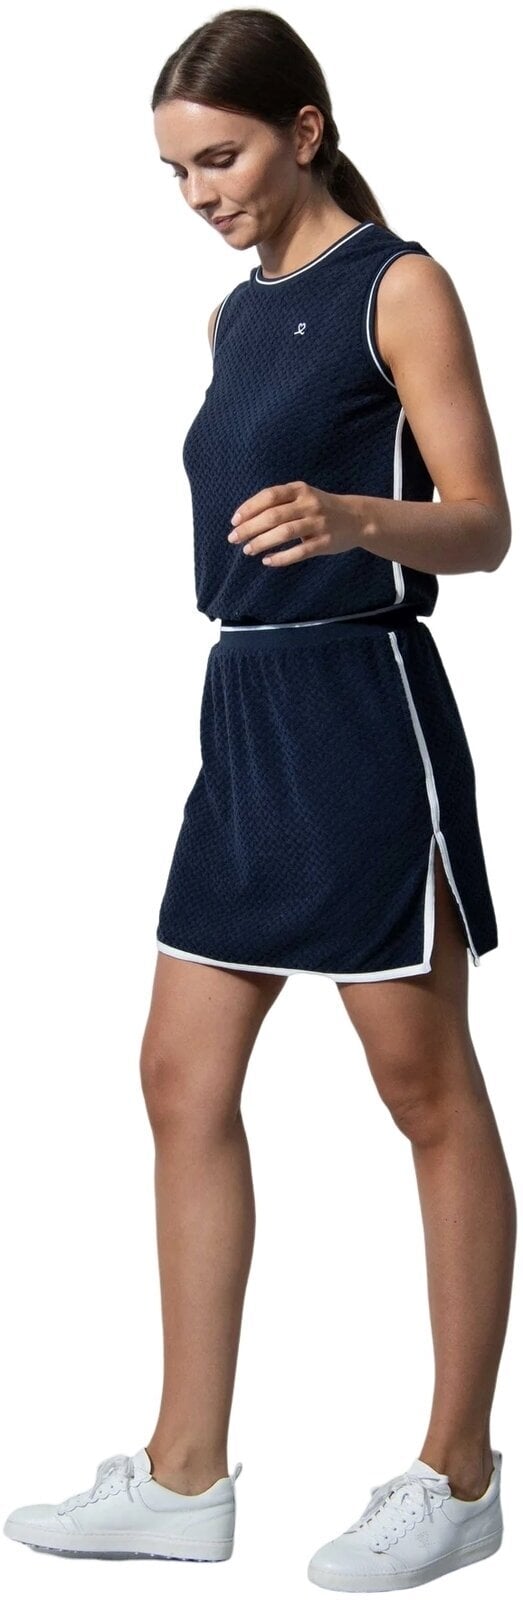 Skirt / Dress Daily Sports Brisbane Sleeveless Dress Navy L